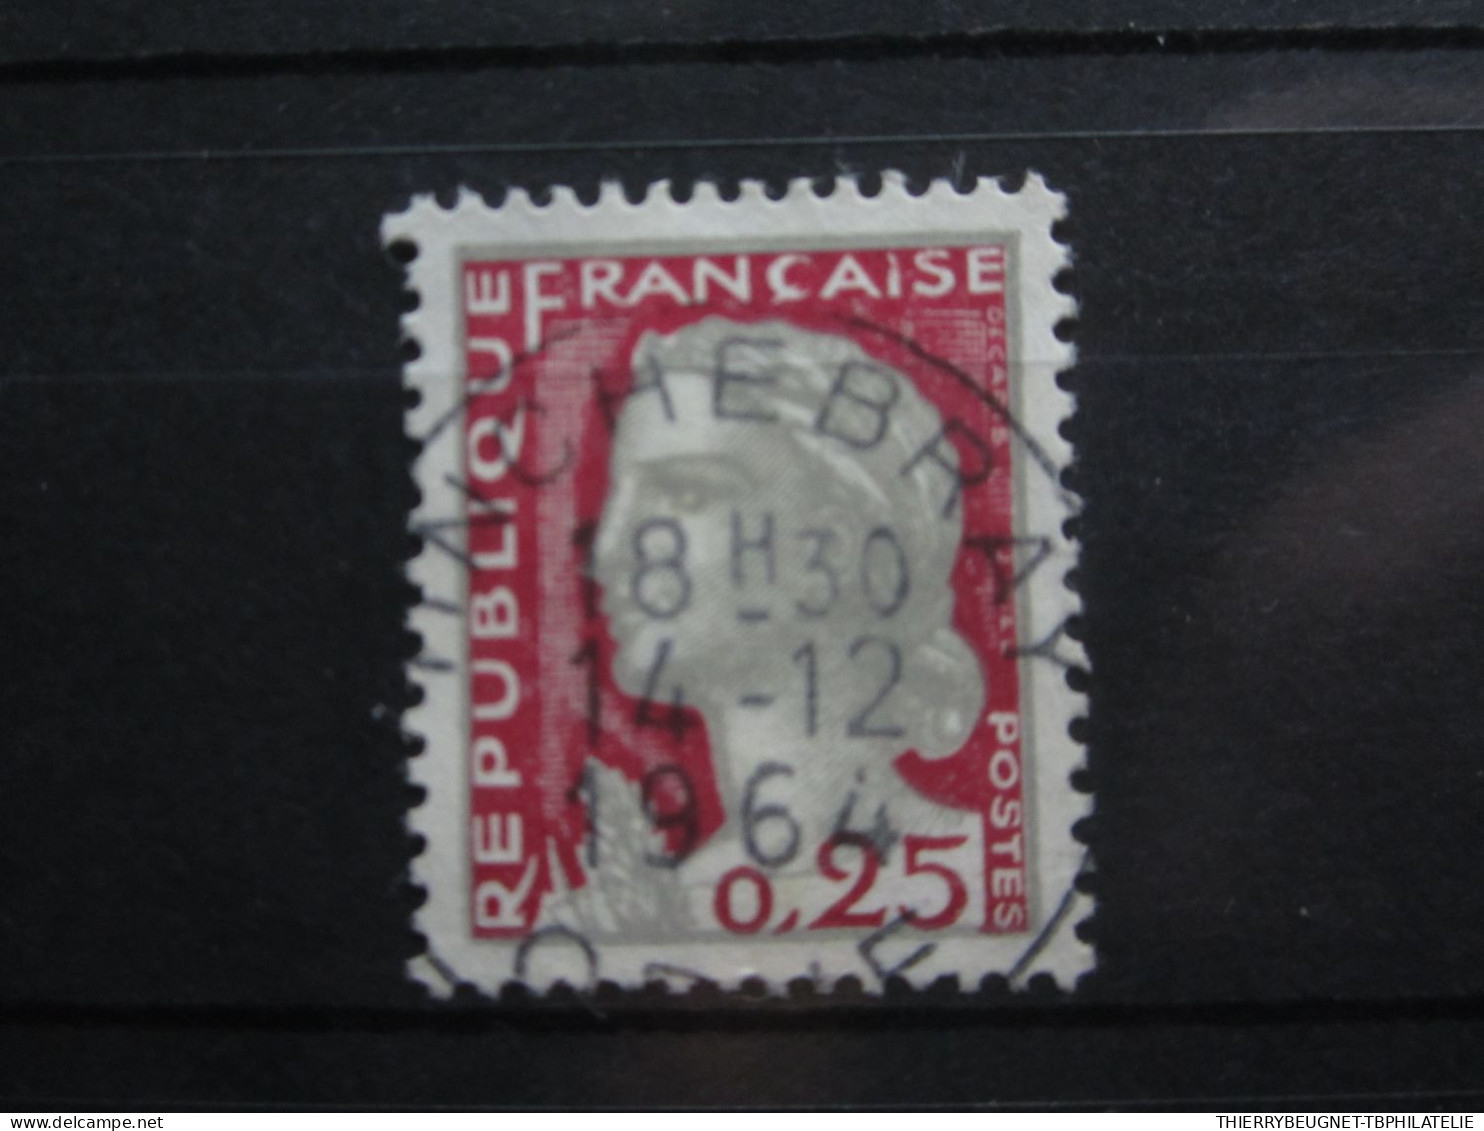 BEAU TIMBRE DE FRANCE N° 1263 - OBLITERATION TINCHEBRAY - 1960 Marianne (Decaris)